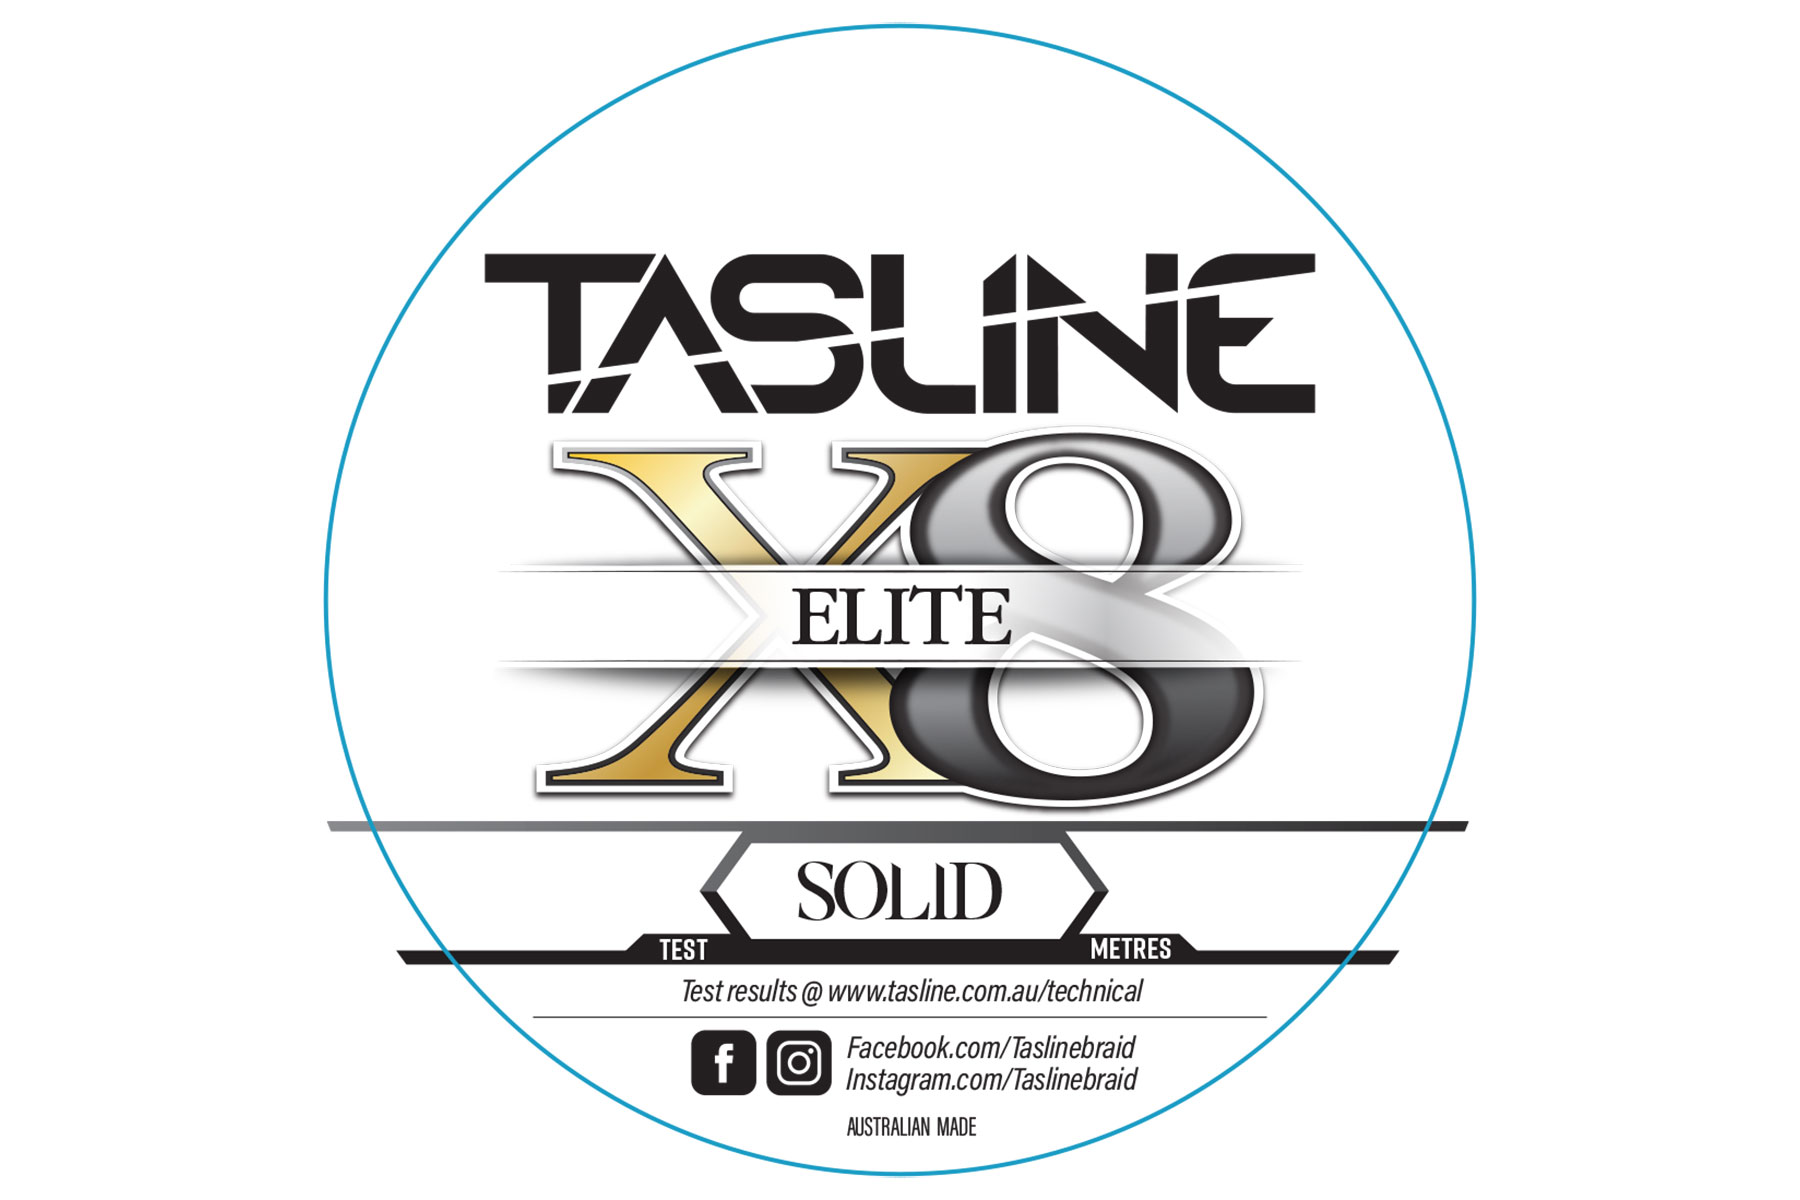 Shop Tasline Braid 8x Elite White Spools 1000m, tasline elite 